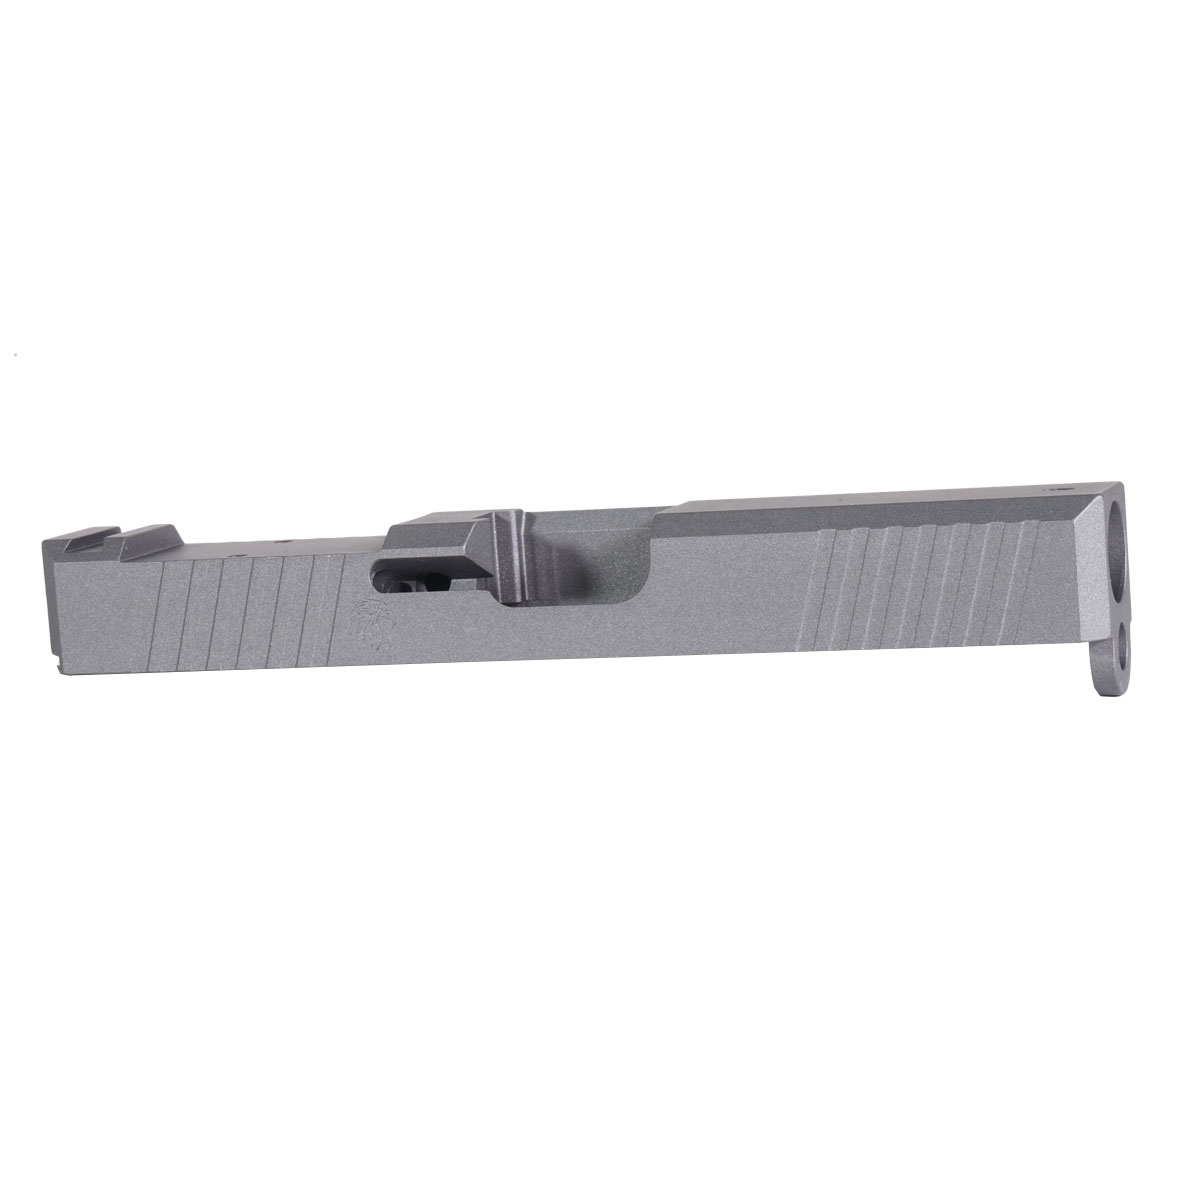 Live Free Armory LF19 RMR Cut Glock G19 Gen 1-3 Compatible Chamfered Stripped Slide - Tungsten Cerakote 